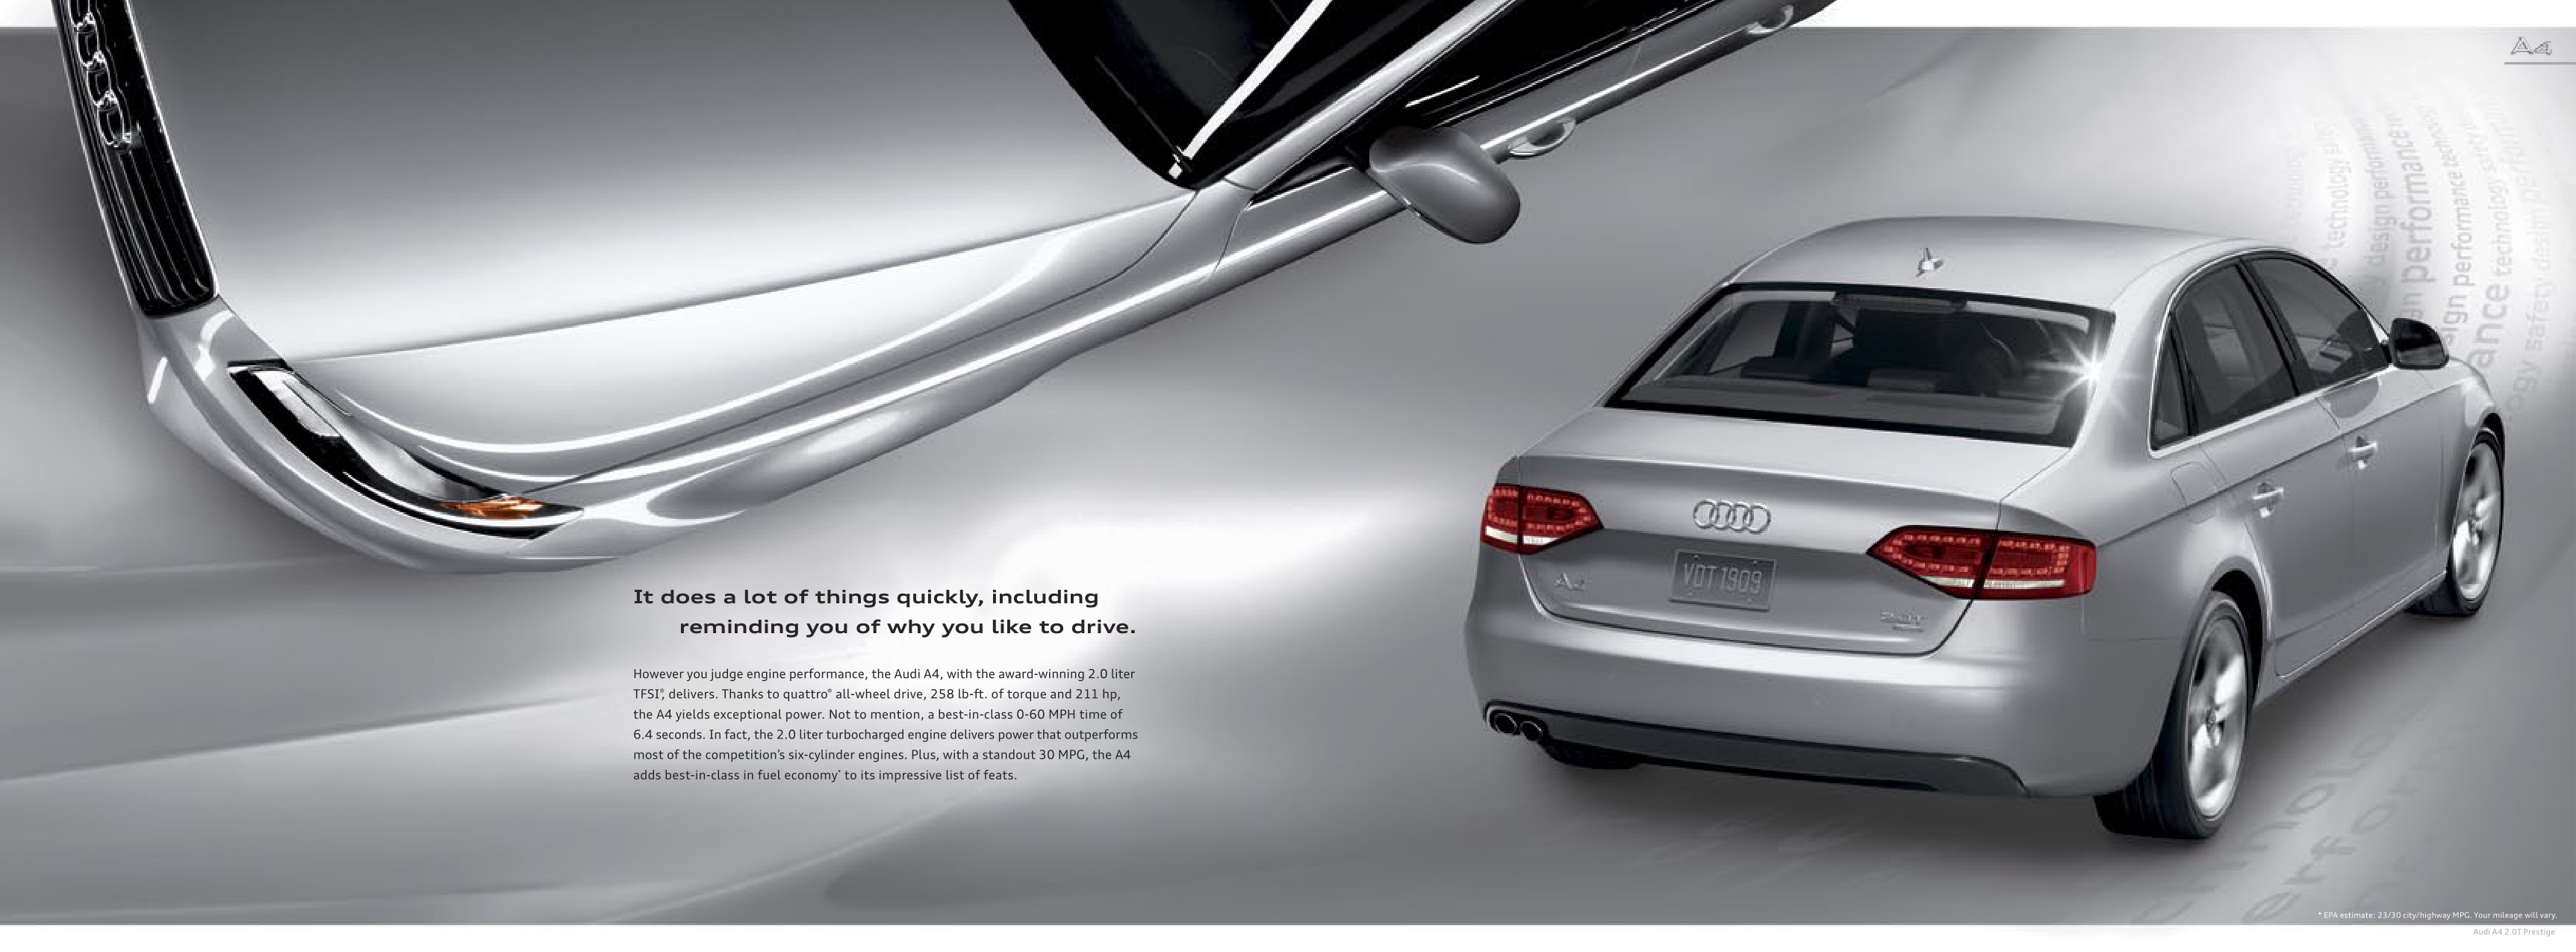 2010 Audi A4 Brochure Page 11